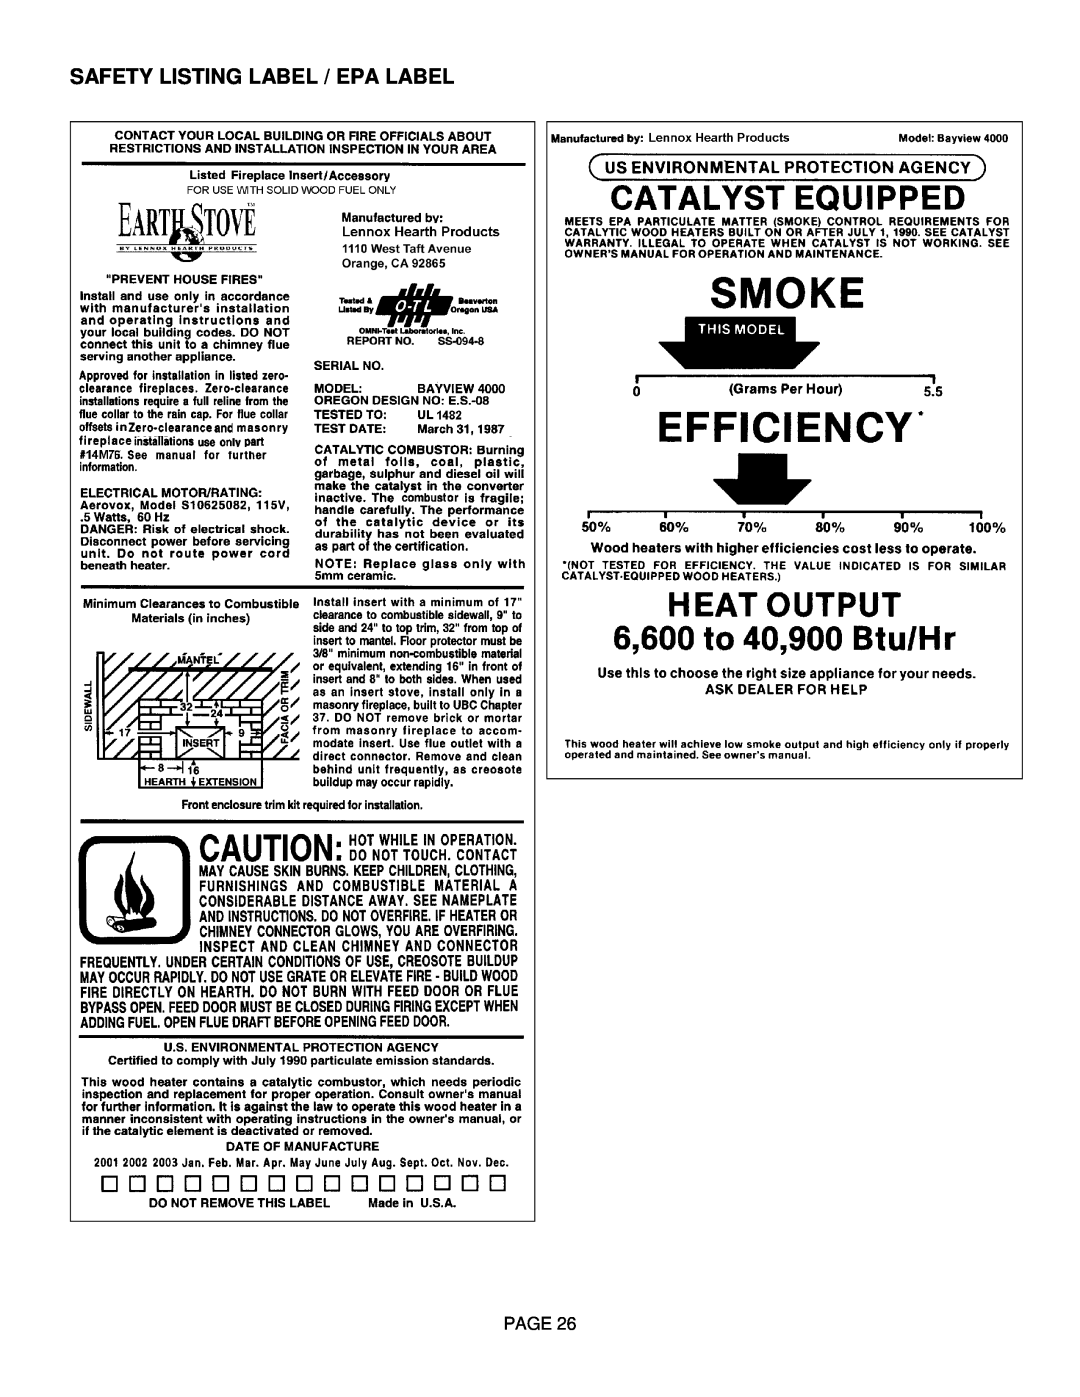 Lennox International Inc BV4000C operation manual Safety Listing Label / Epa Label, Page 